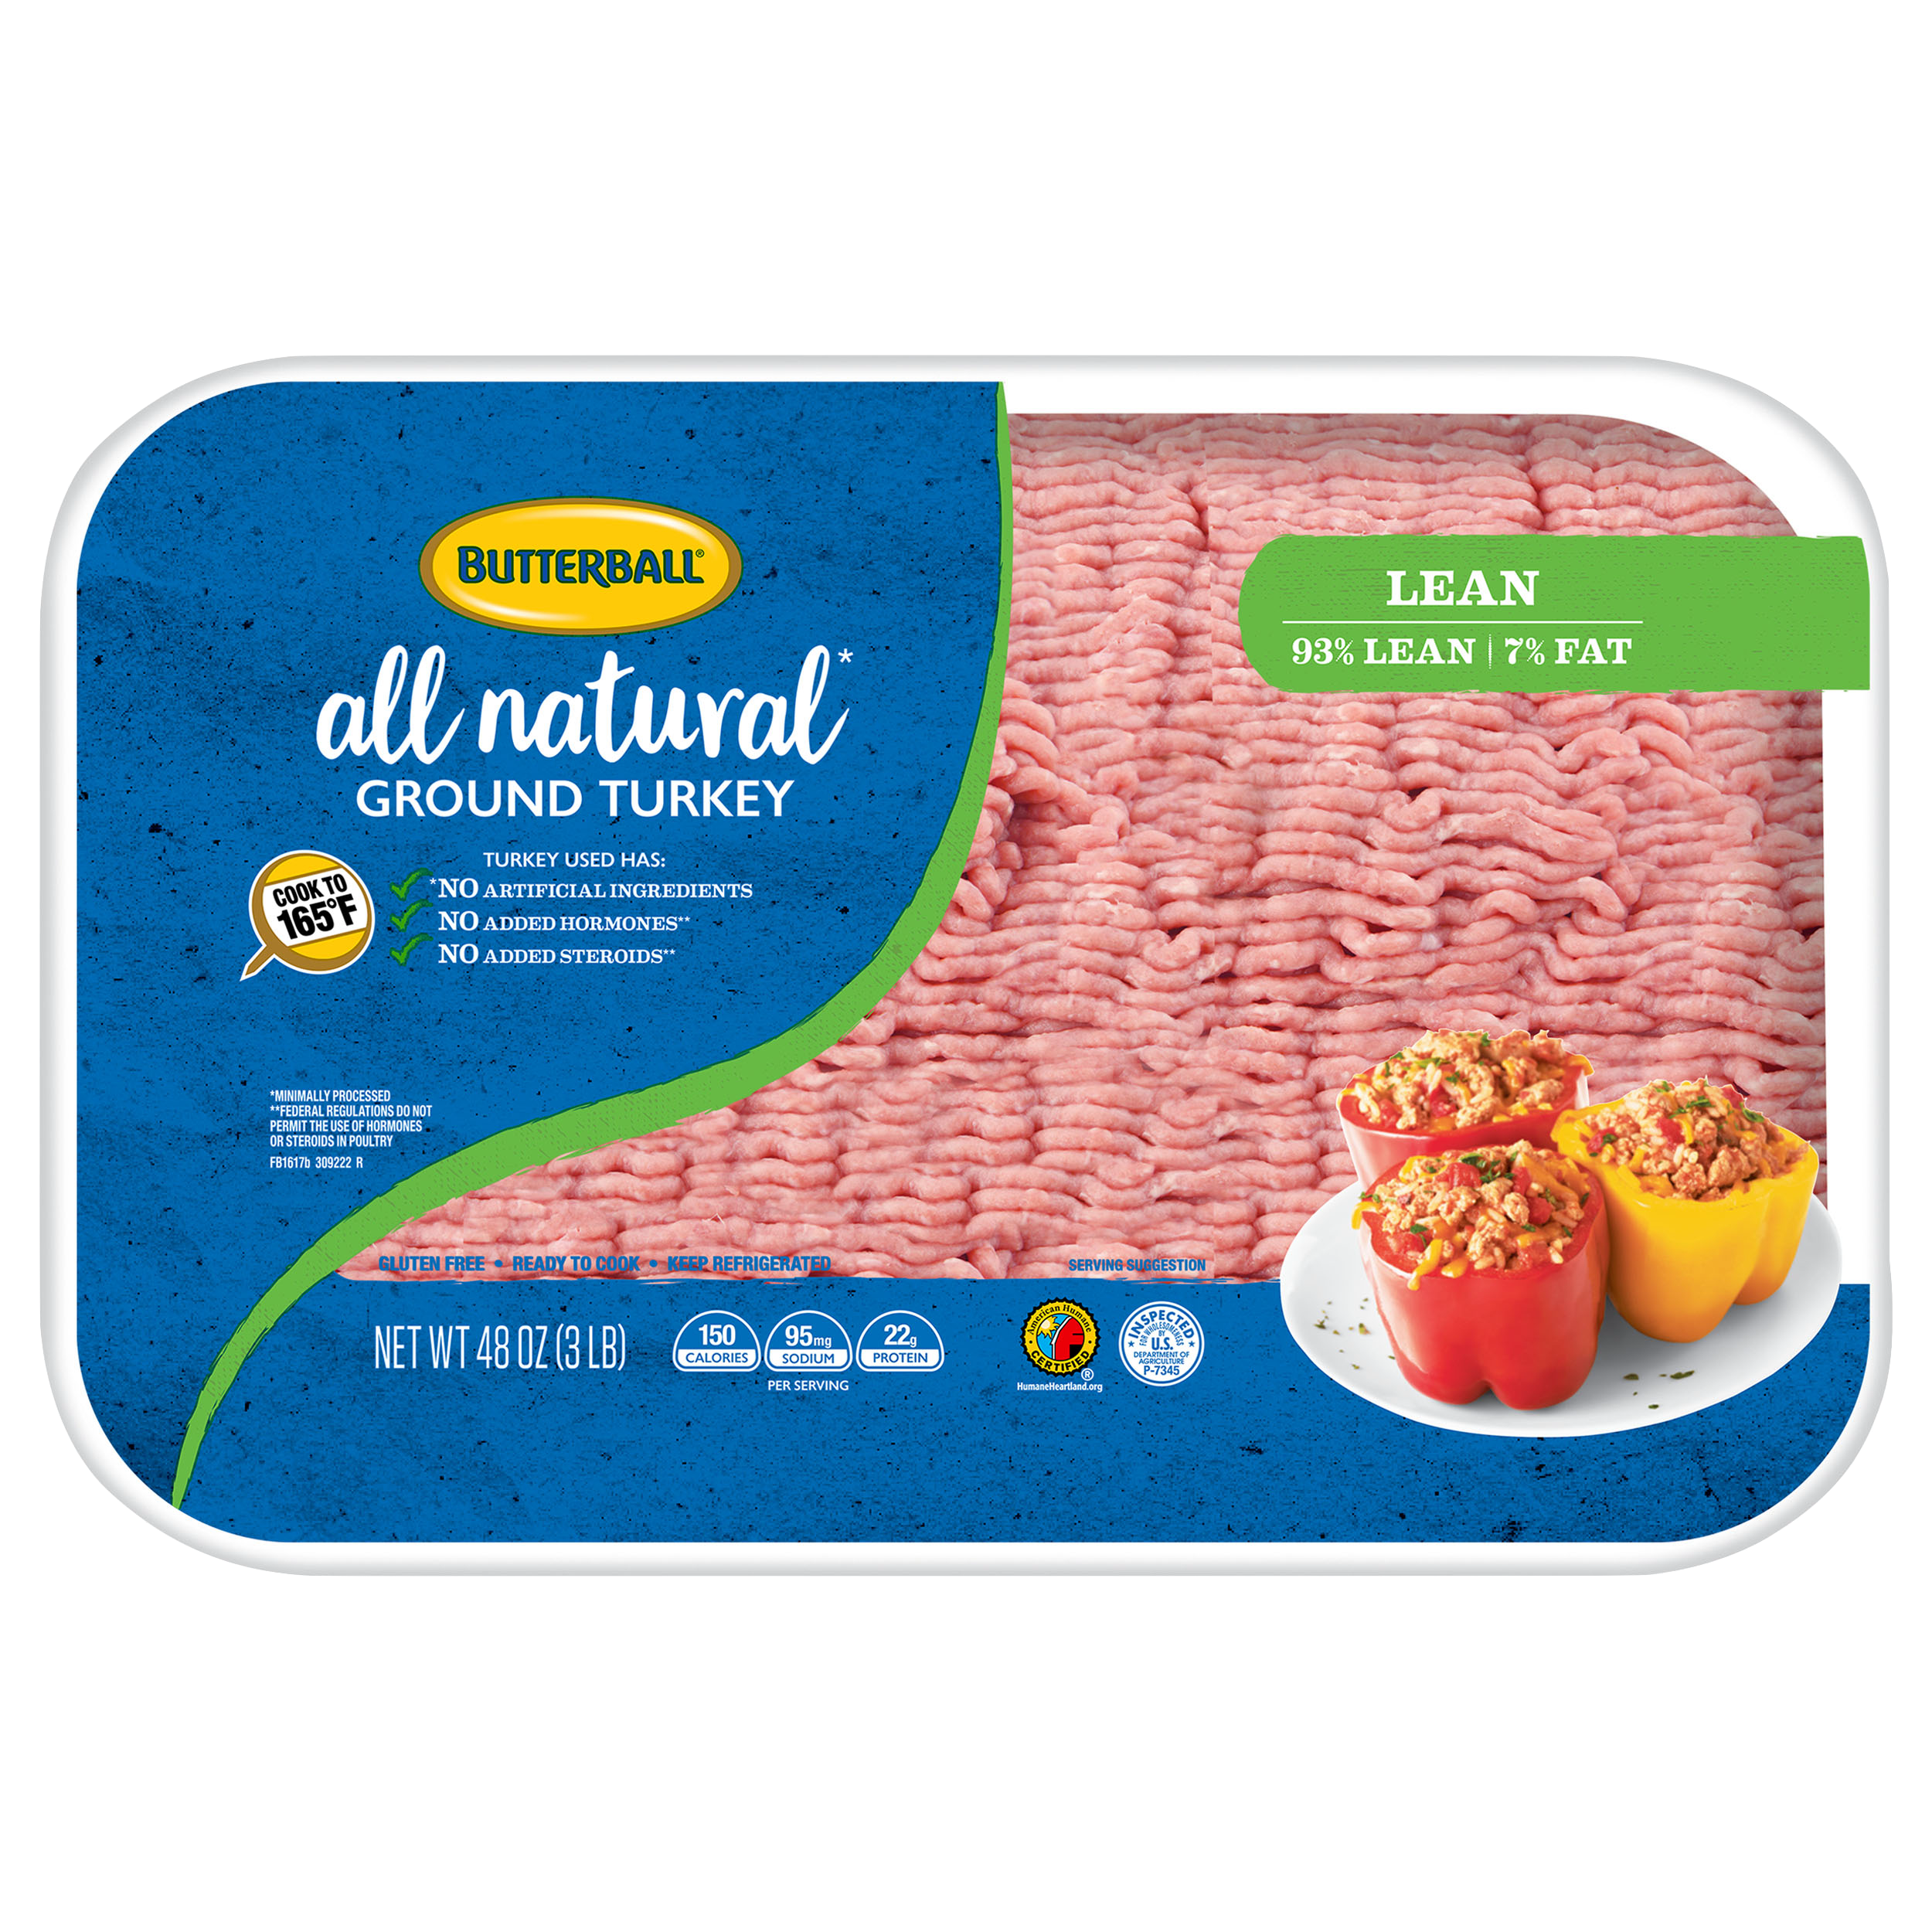 Whole Foods Market Ground Turkey White Meat: Nutrition & Ingredients